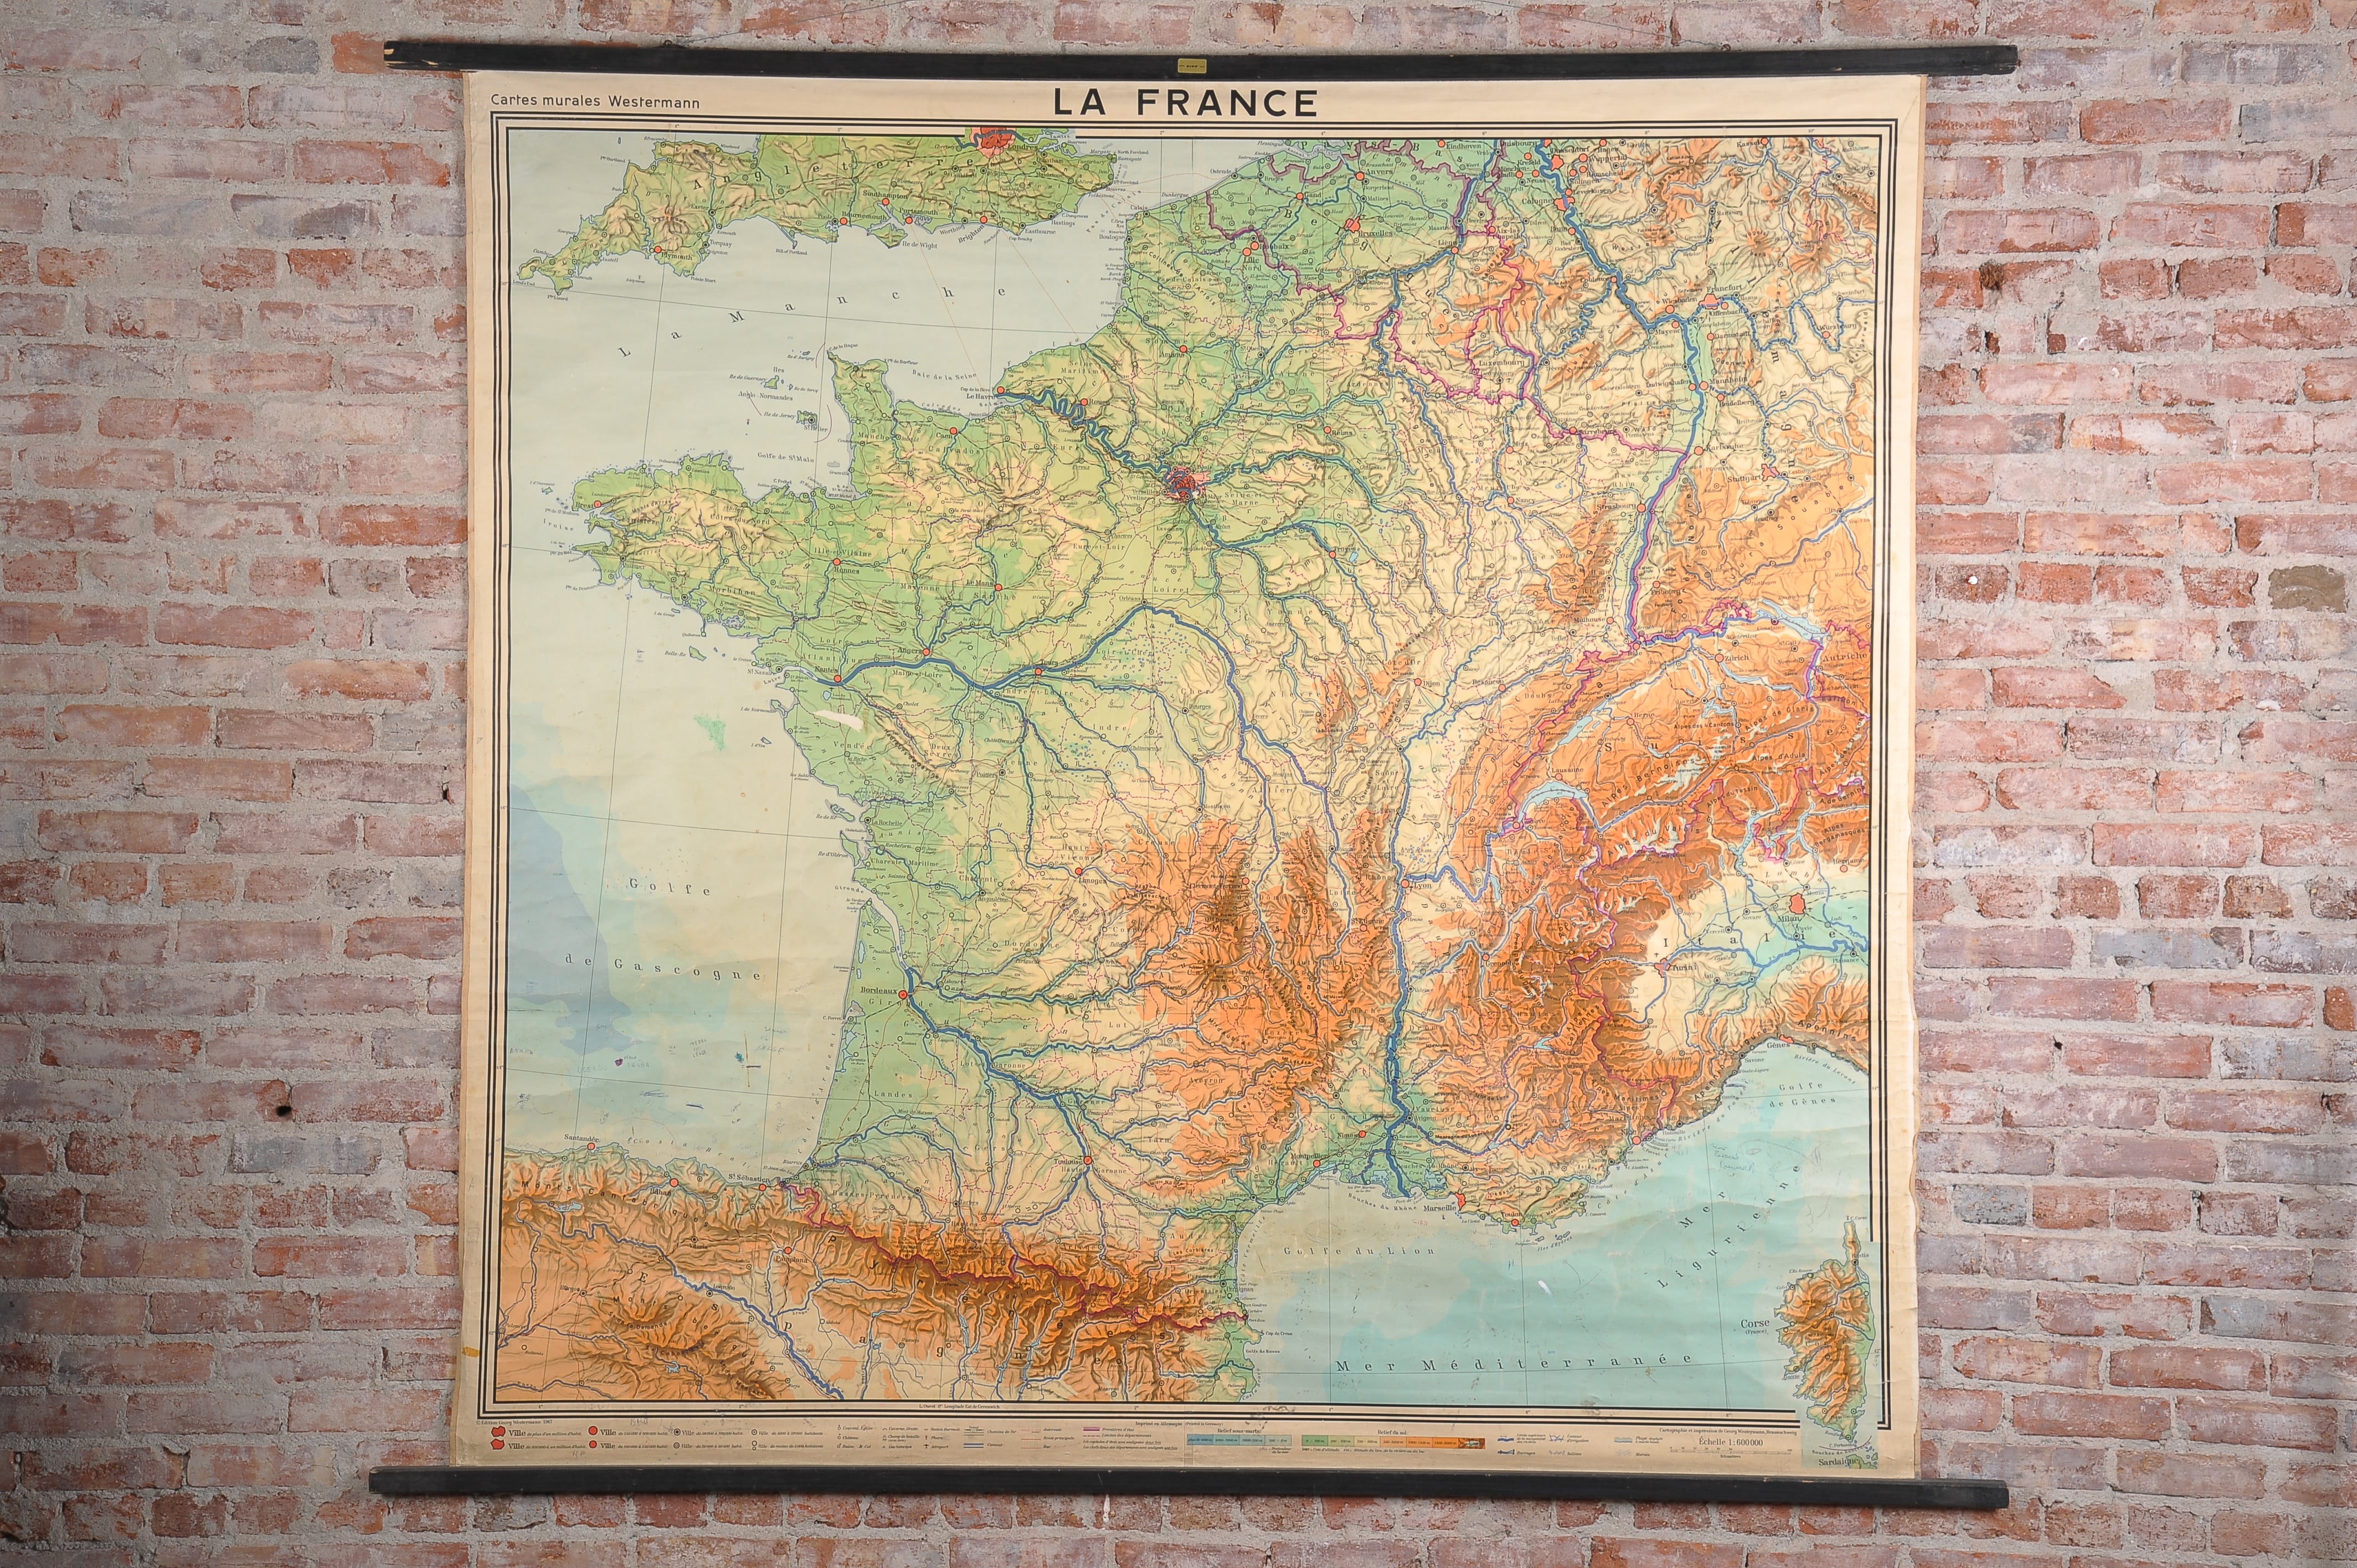 La France School Map from Austrian Library